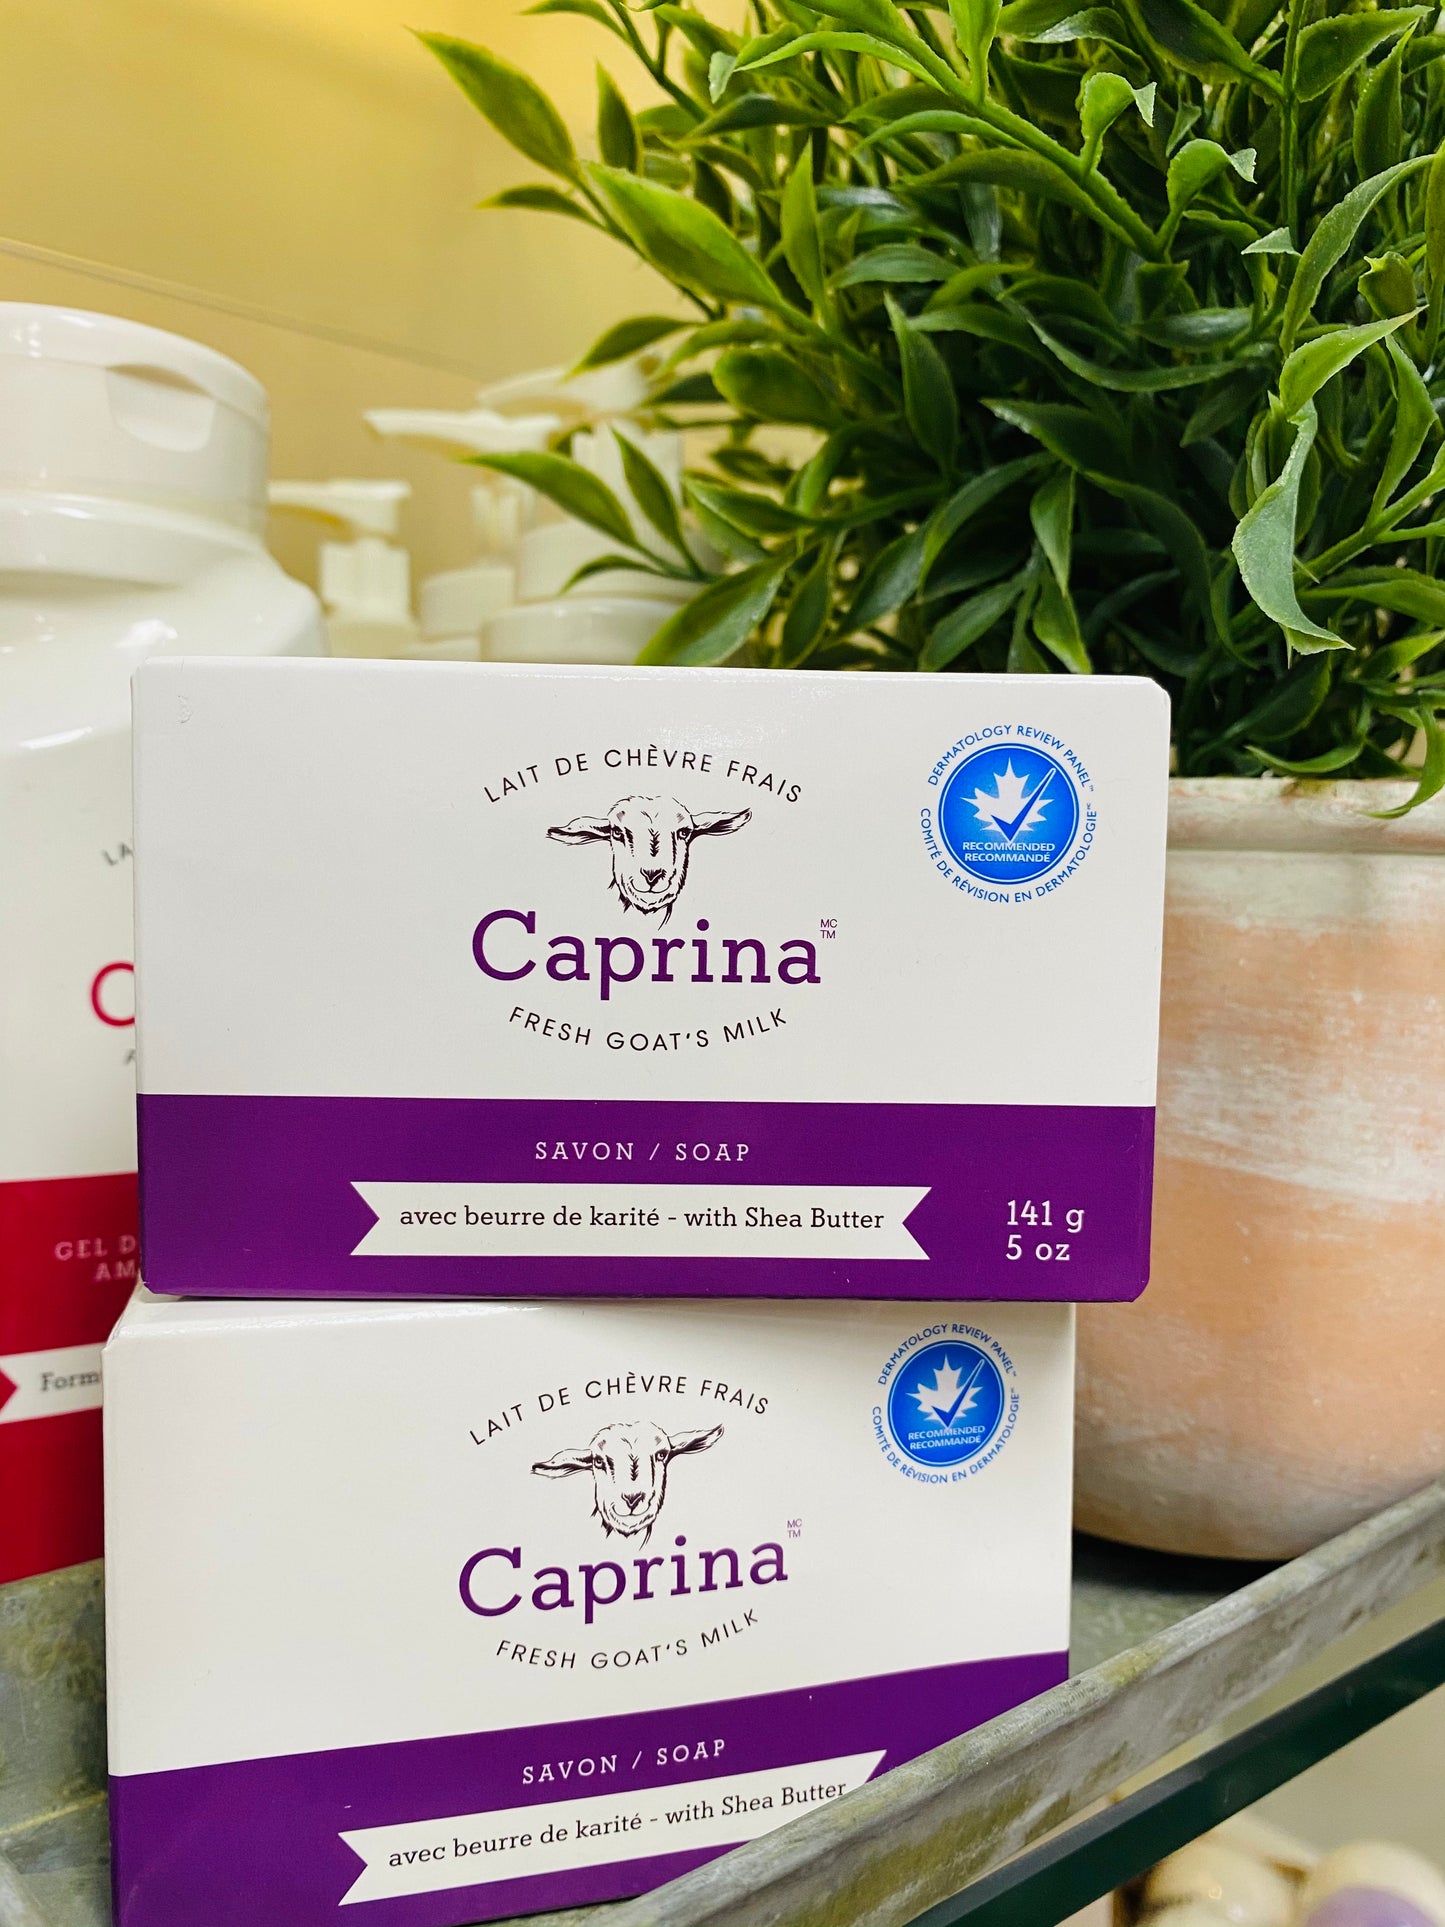 Canus Caprina Goat's Milk Bath Products